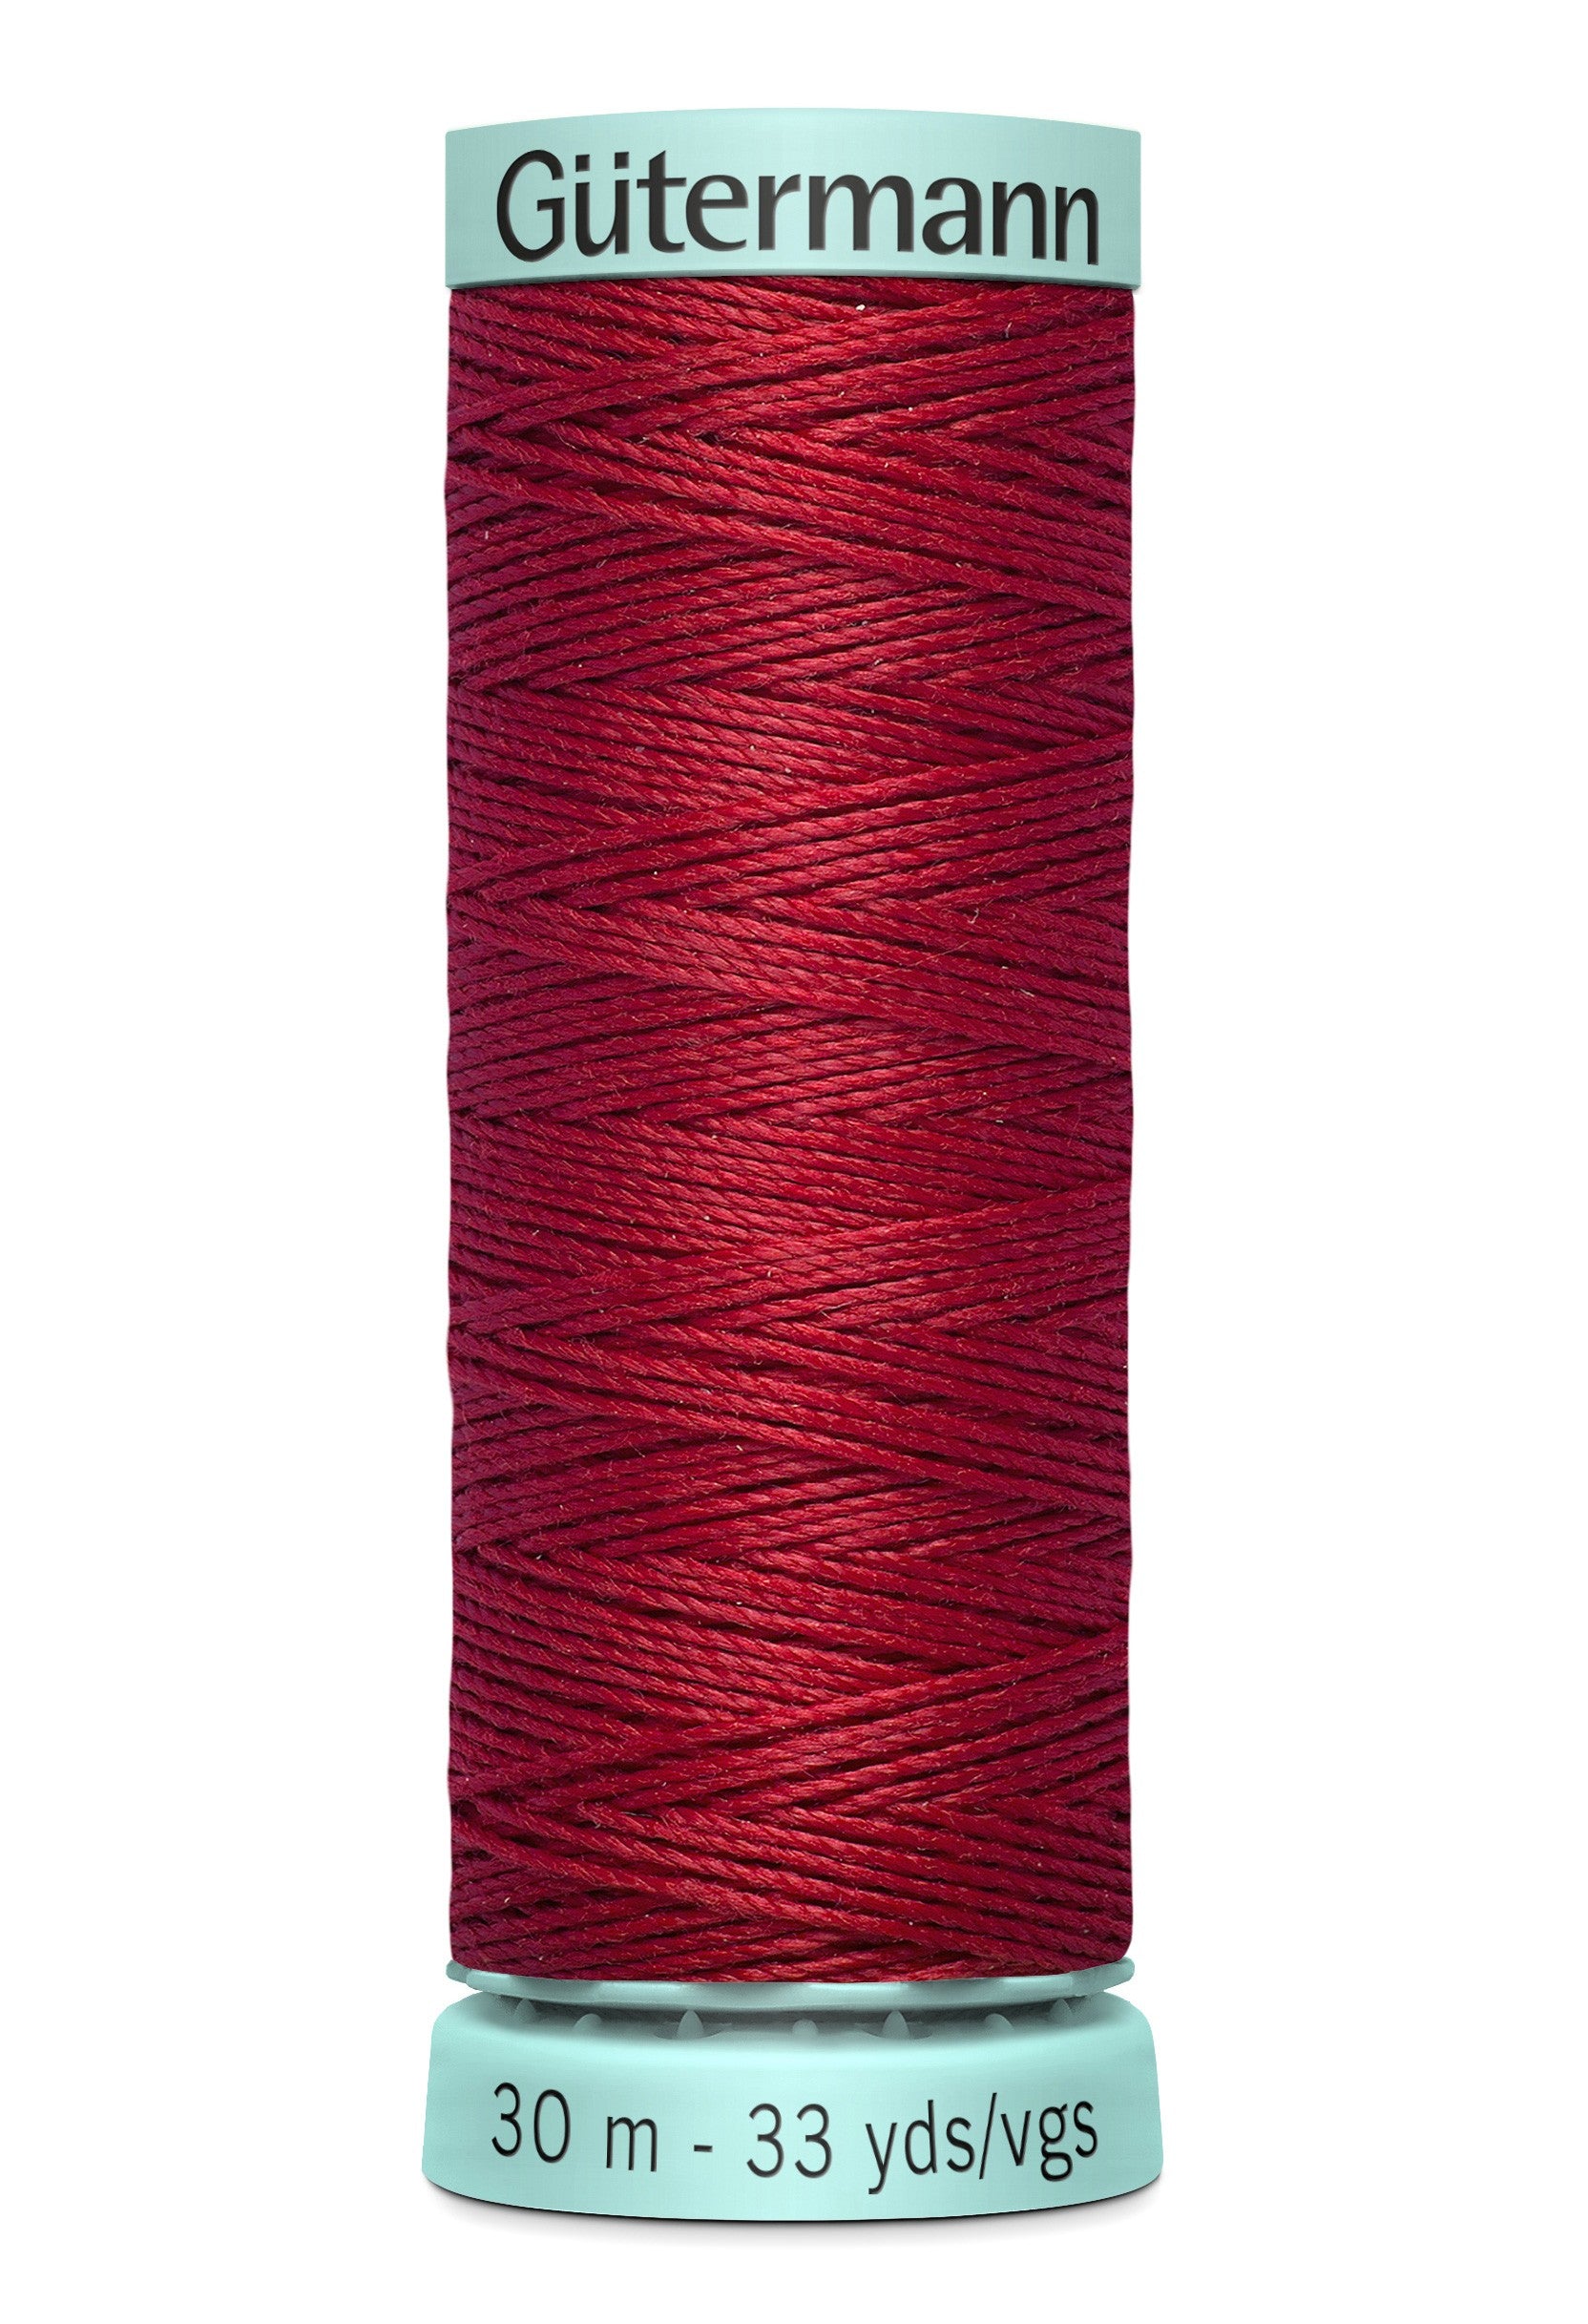 Top Stitched Seam – Pattern-Making.com